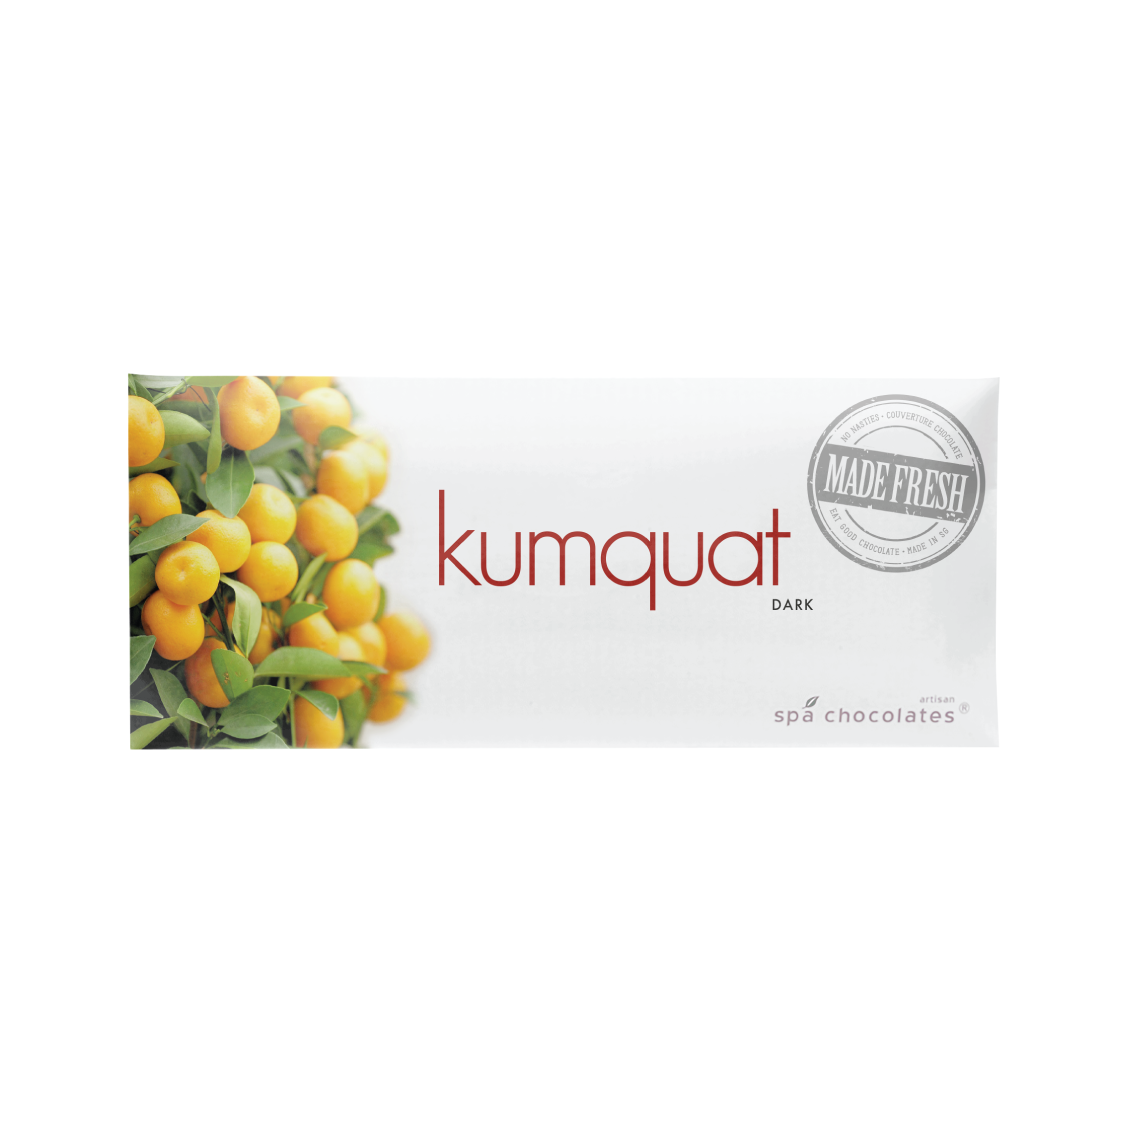 Kumquat (Dark Chocolate) - Limited Edition!